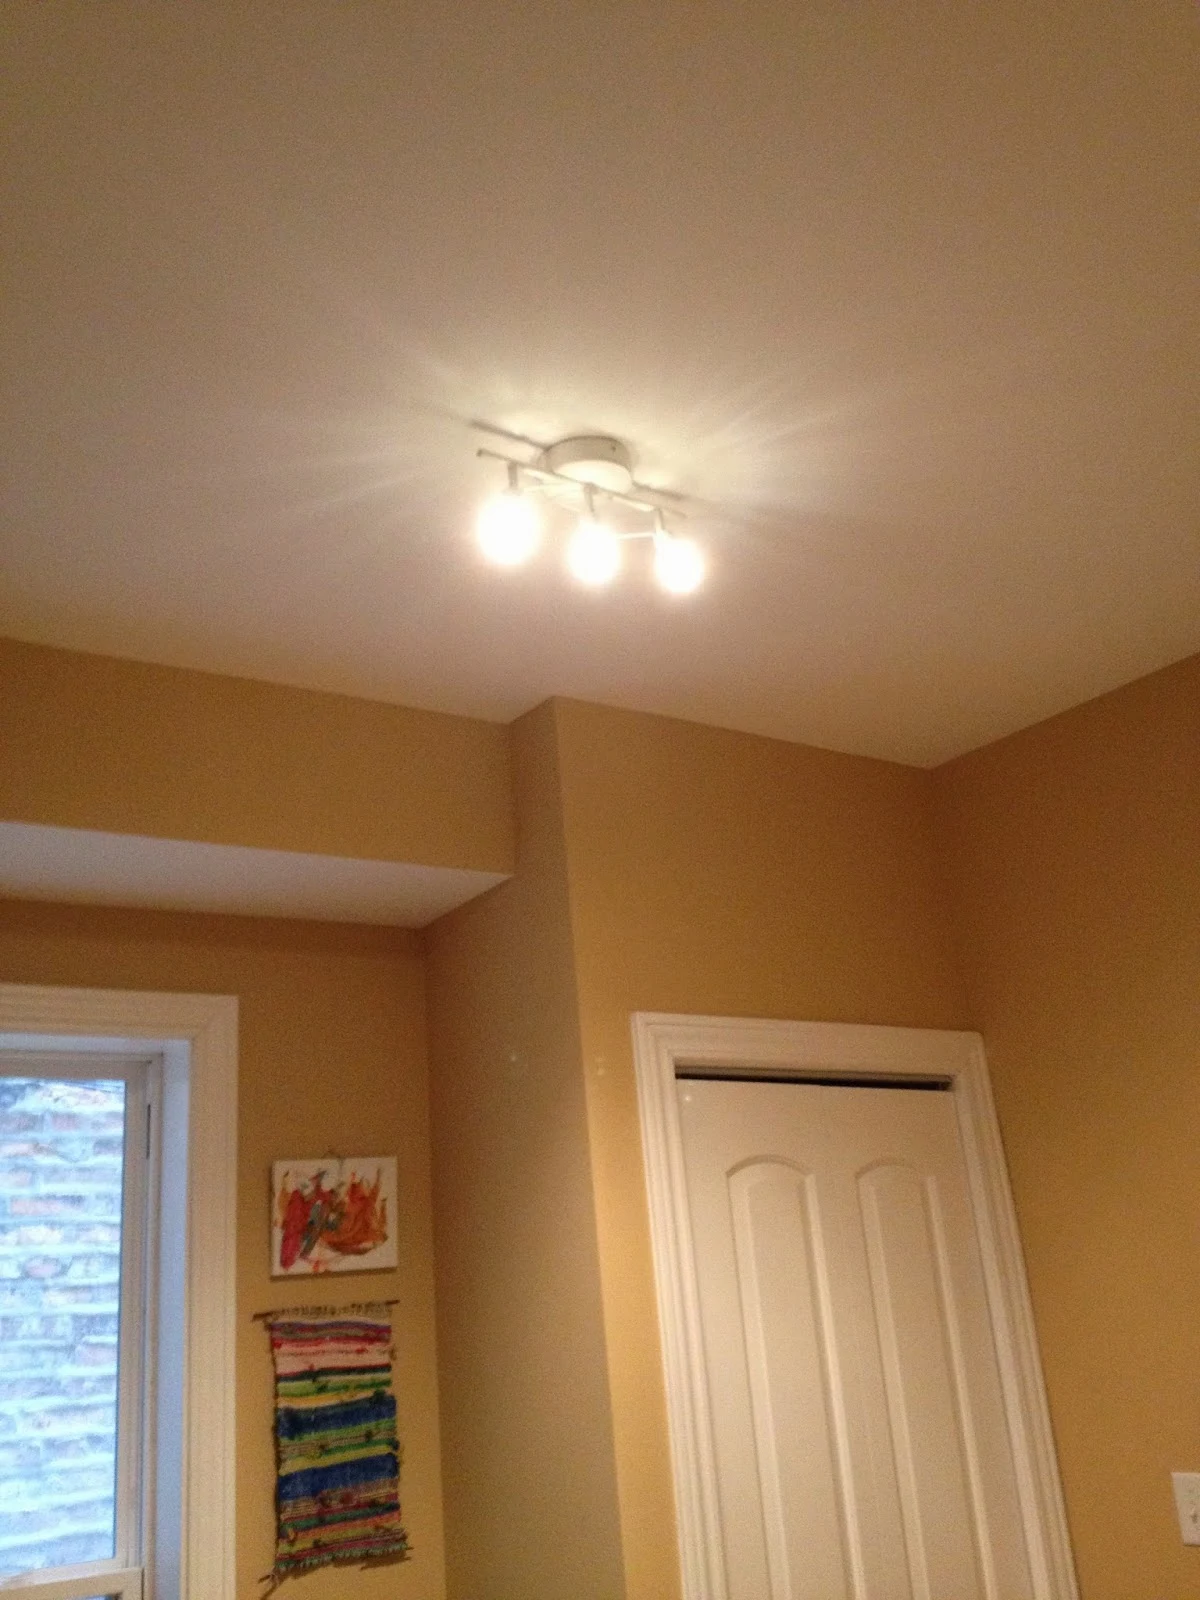 ceiling fan replaced halogen light fixture